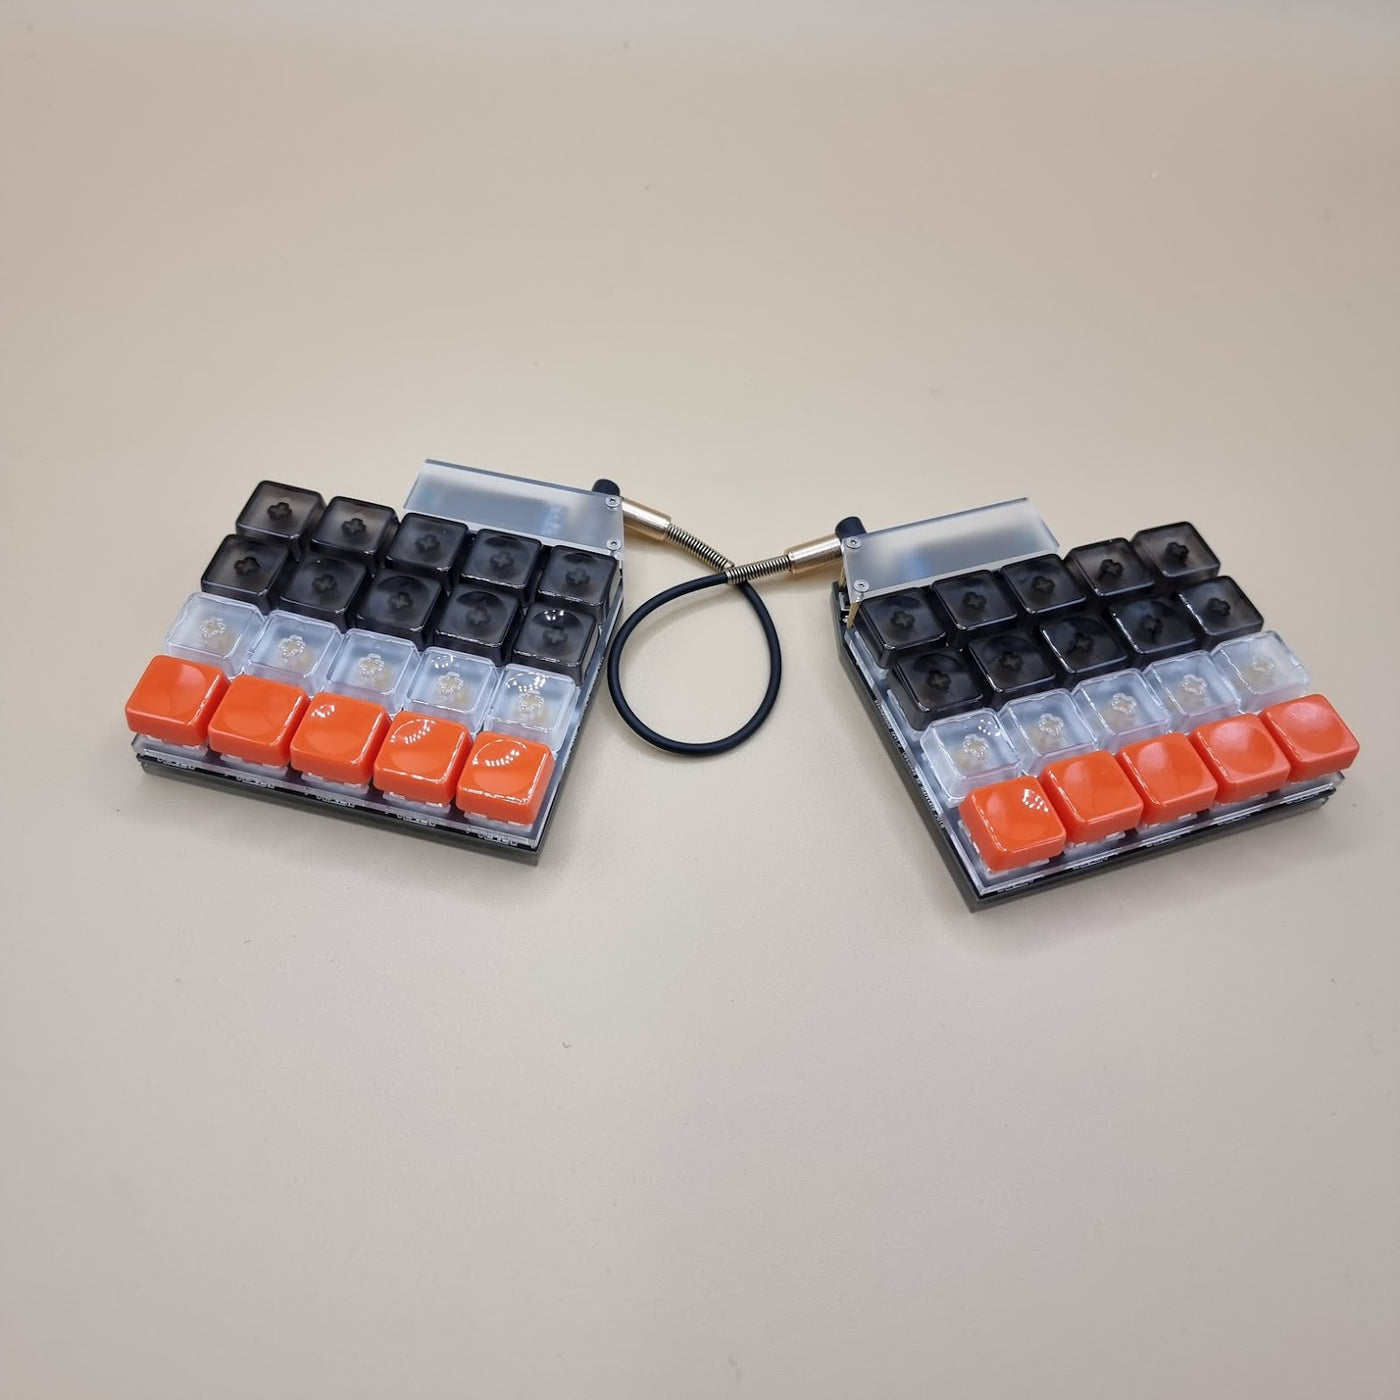 Rhymestone Keyboard Kit